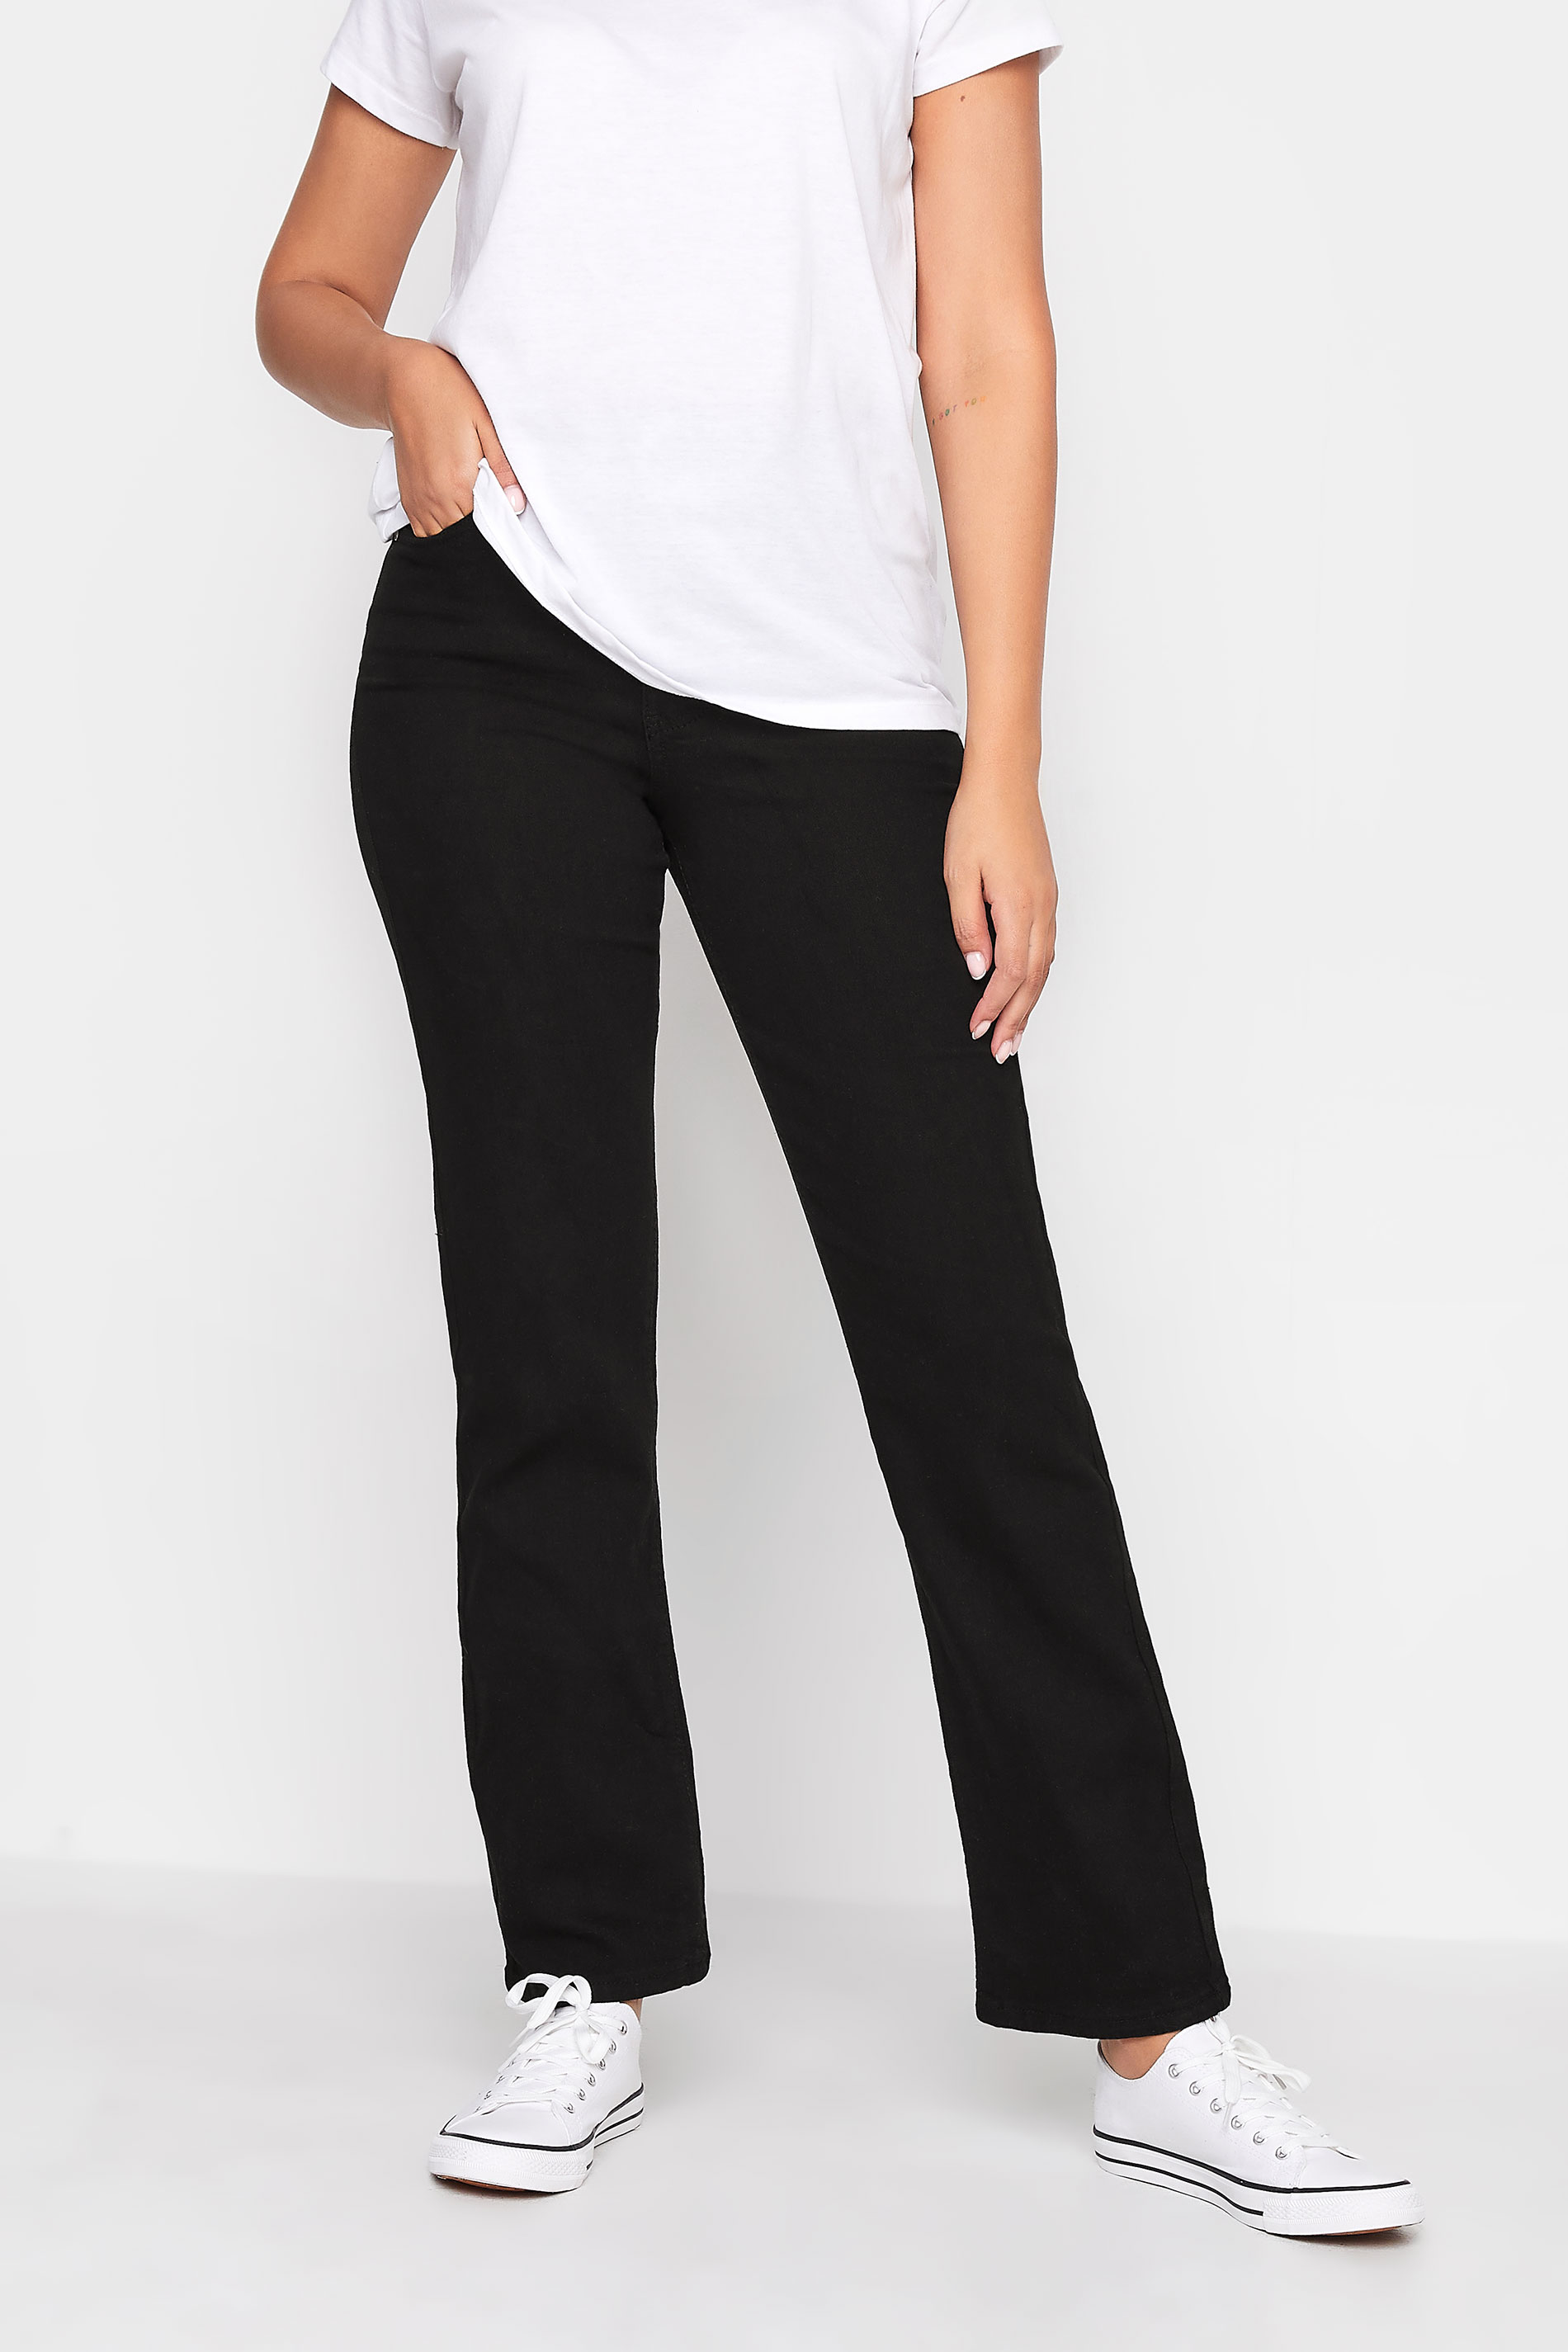 LTS Tall Women's Black Straight Leg Jeans | Long Tall Sally  1